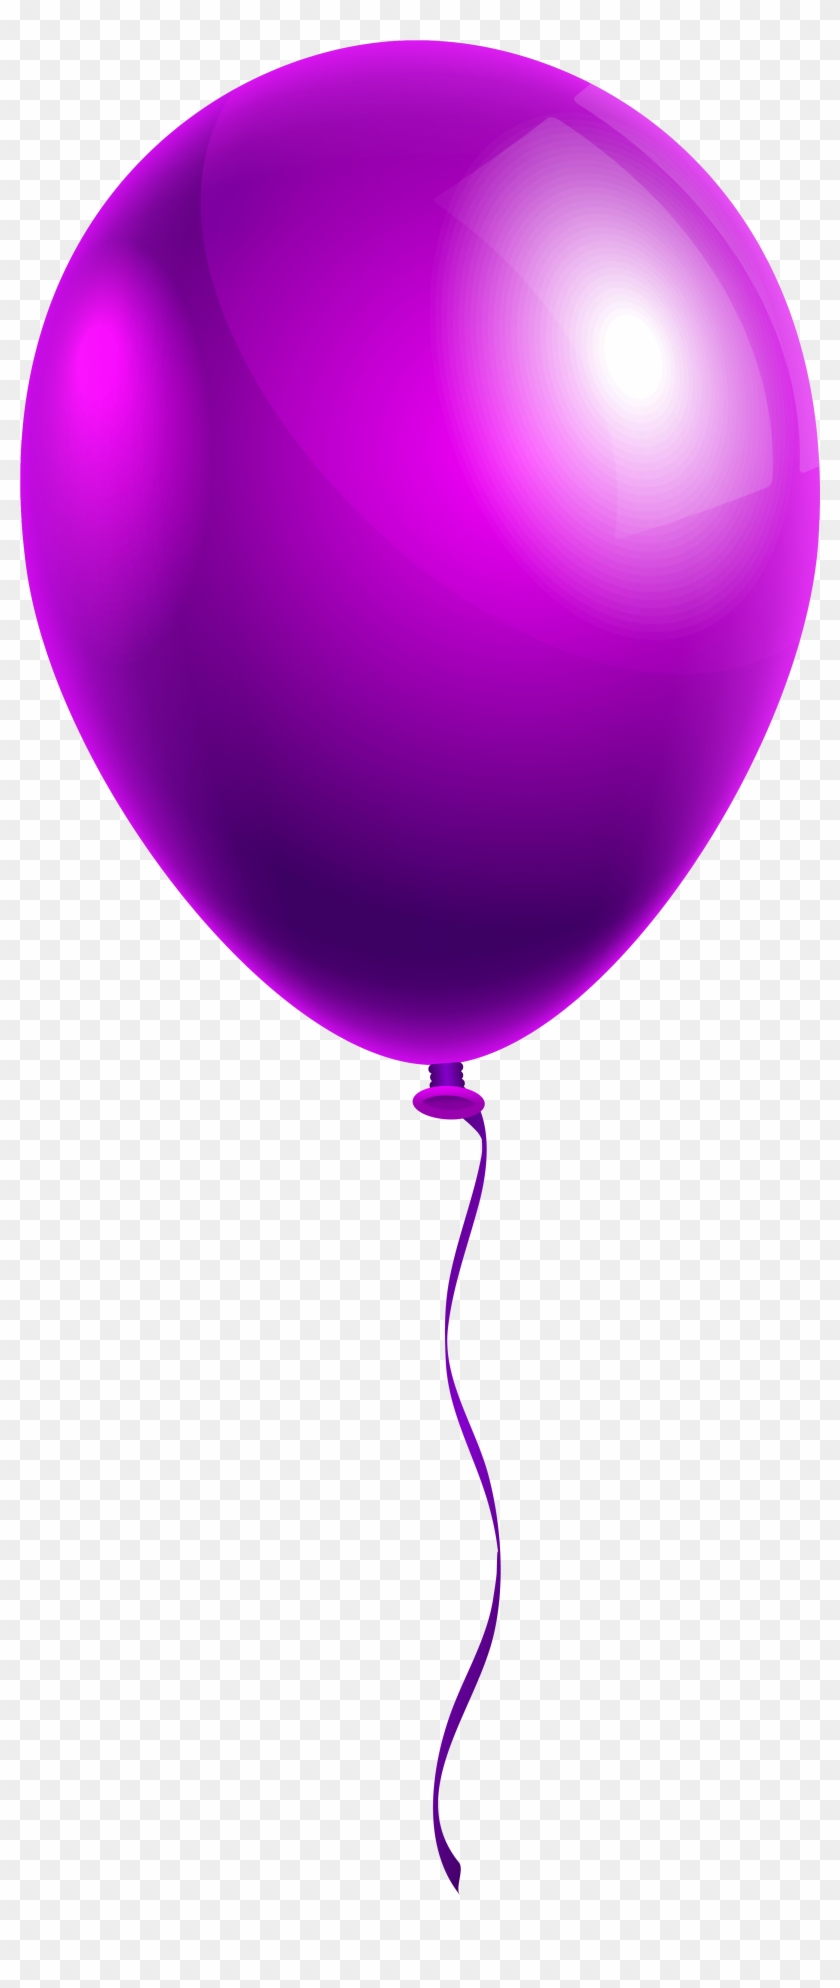 Balloon Clipart Purple Heart - Single Balloons Png #95062